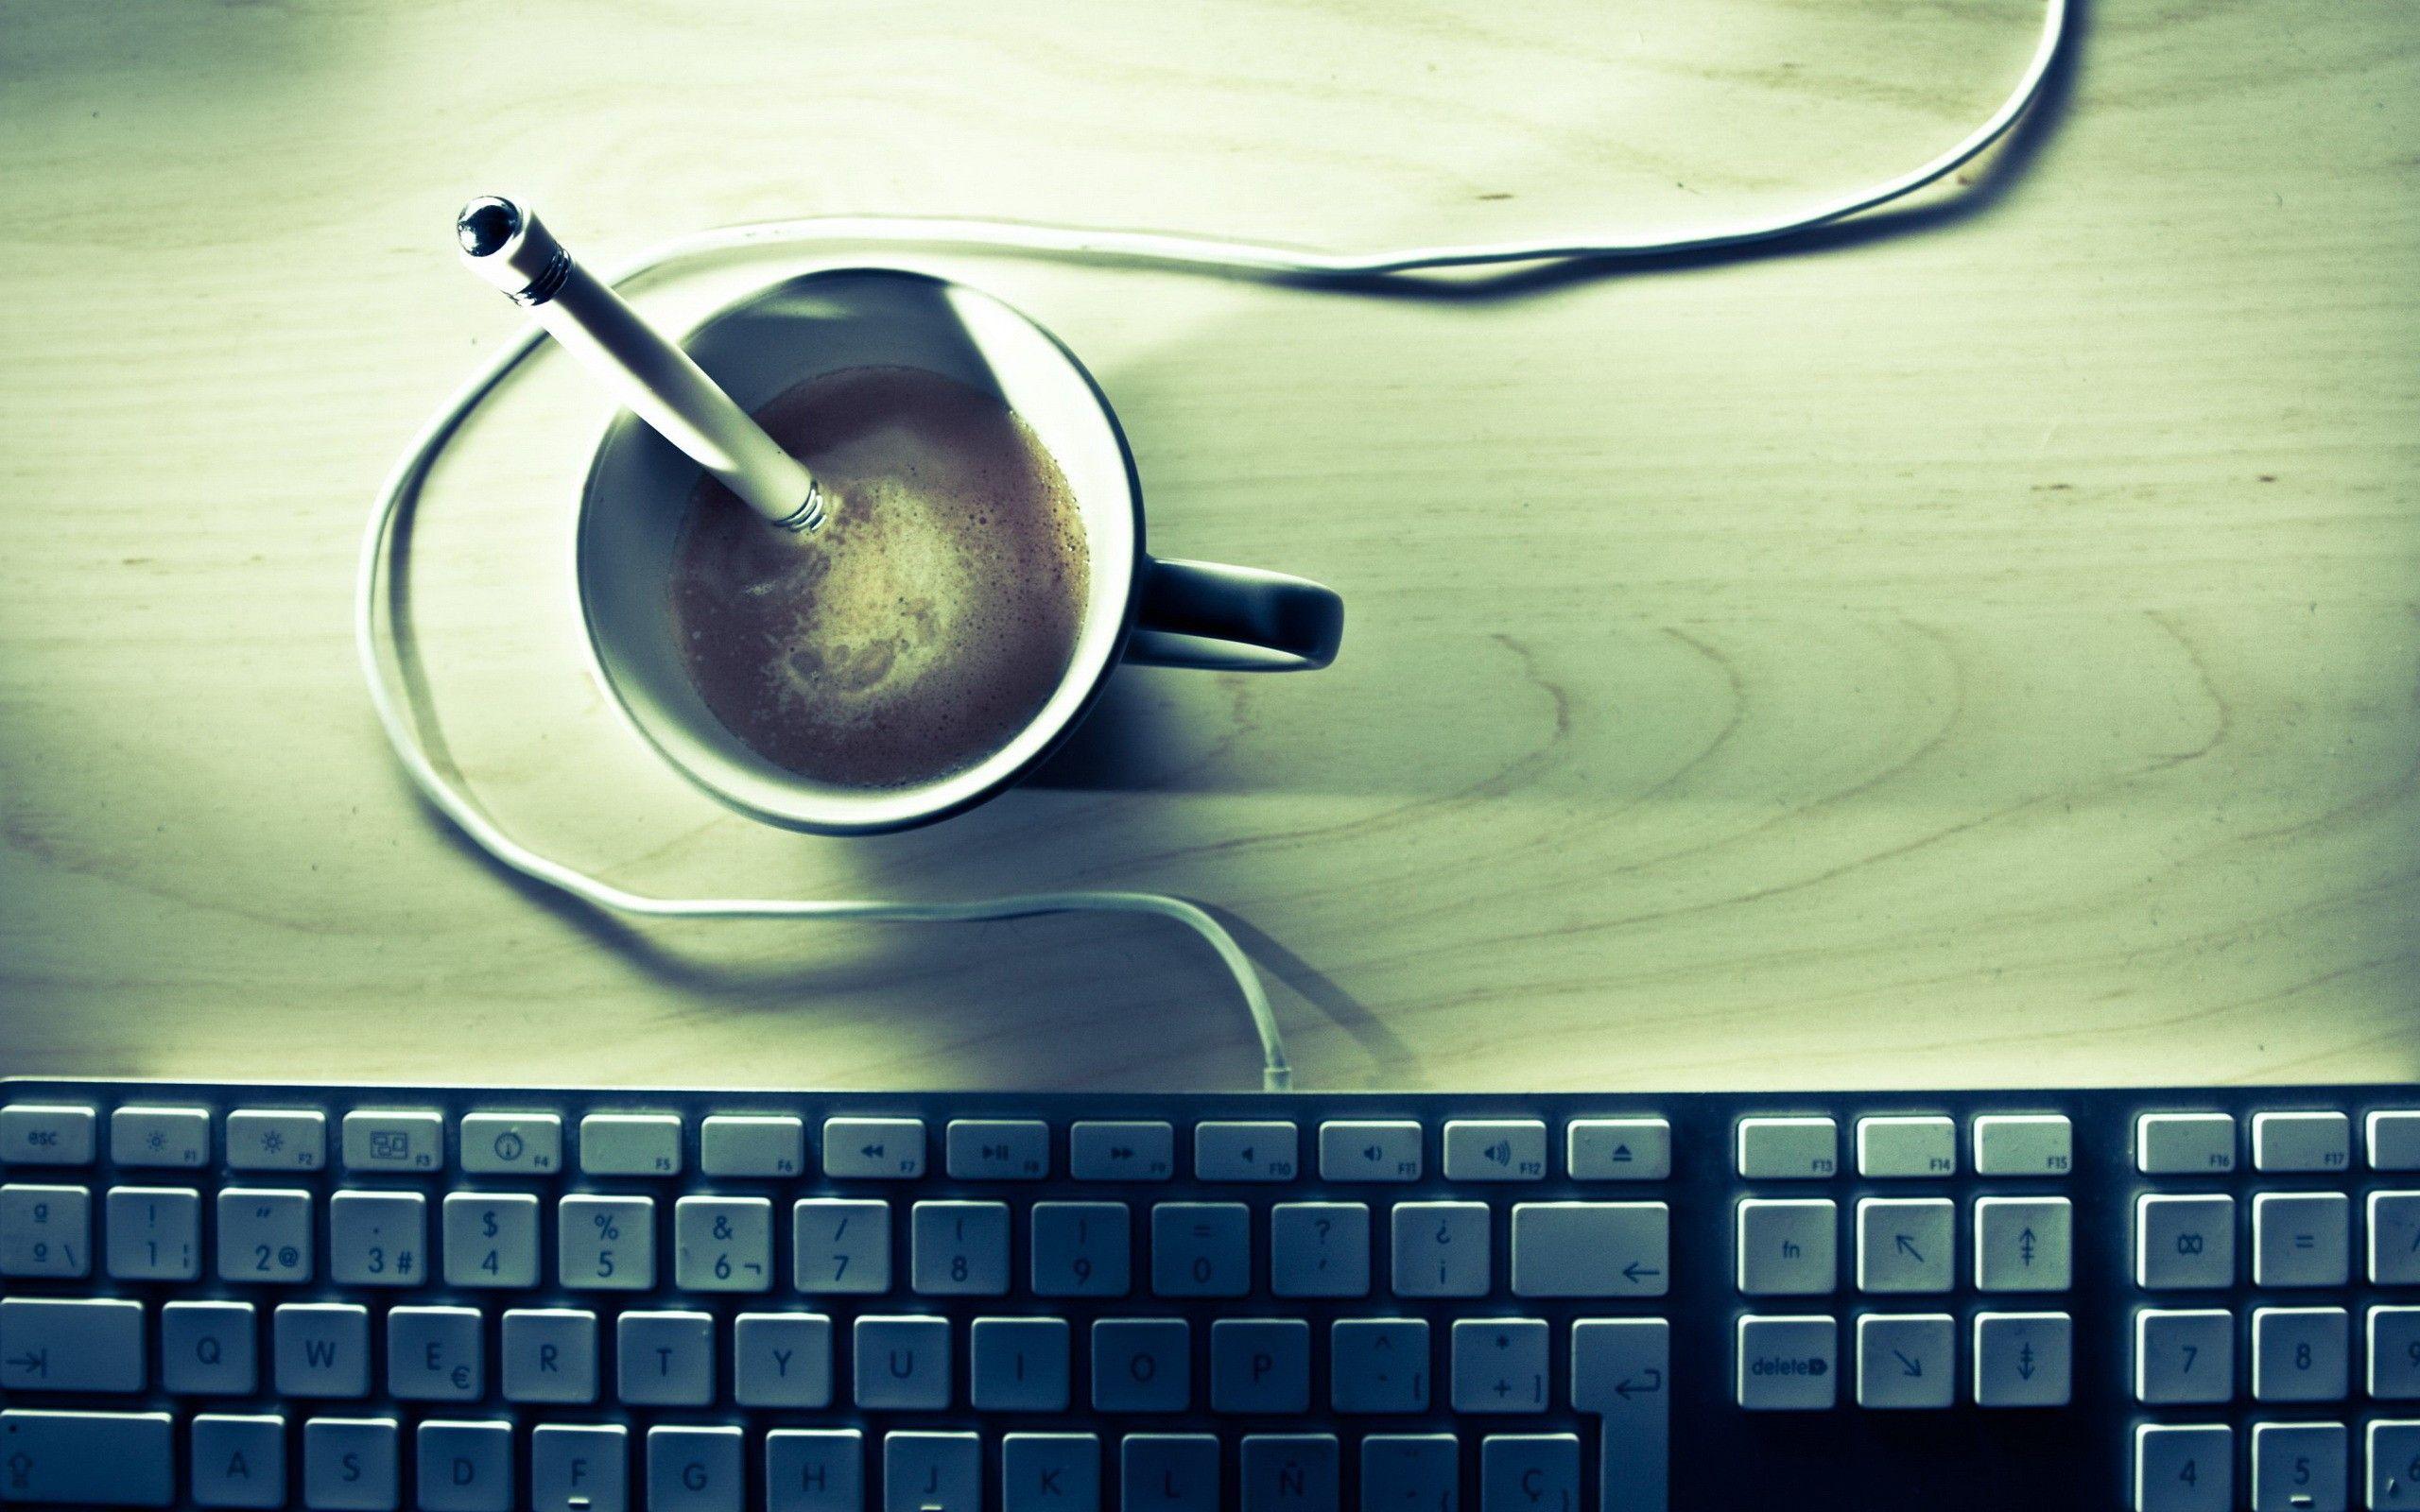 Coffee and Keyboard wallpaper. Coffee and Keyboard